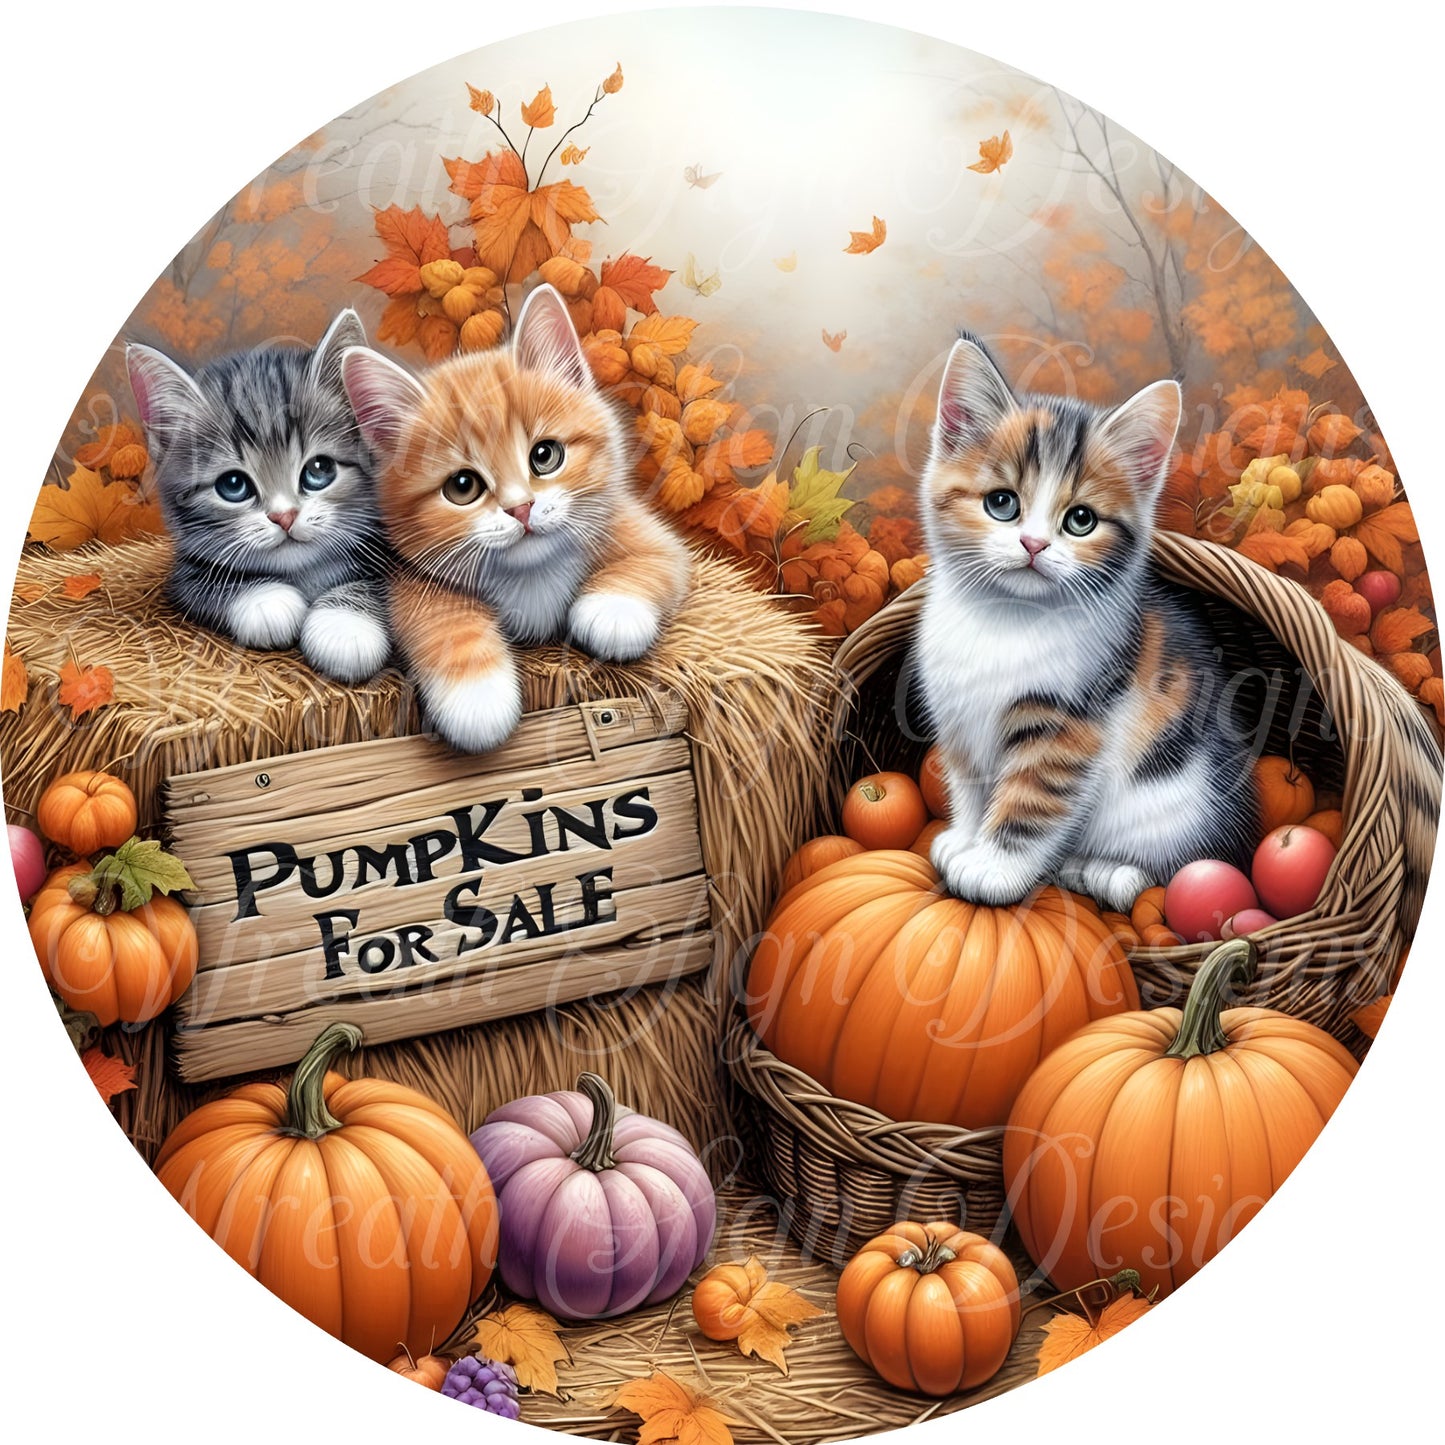 Pumpkins for Sale fall wreath sign, cute kittens autumn wreath sign, Pumpkins, Cats, and apples, wreath sign, wreath center, attachment